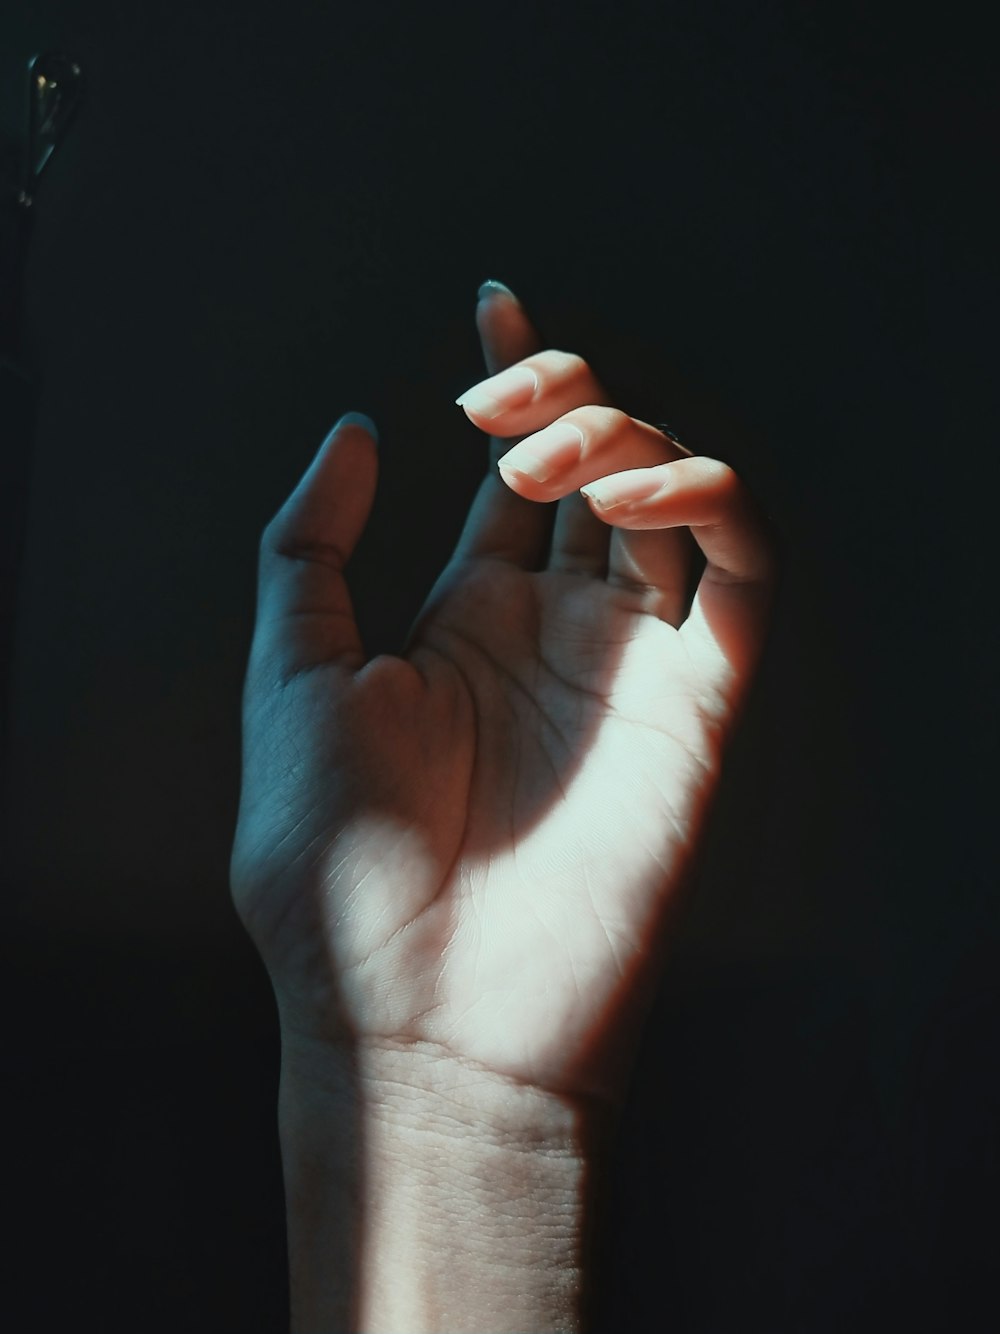 a person's hand holding a cigarette in the dark